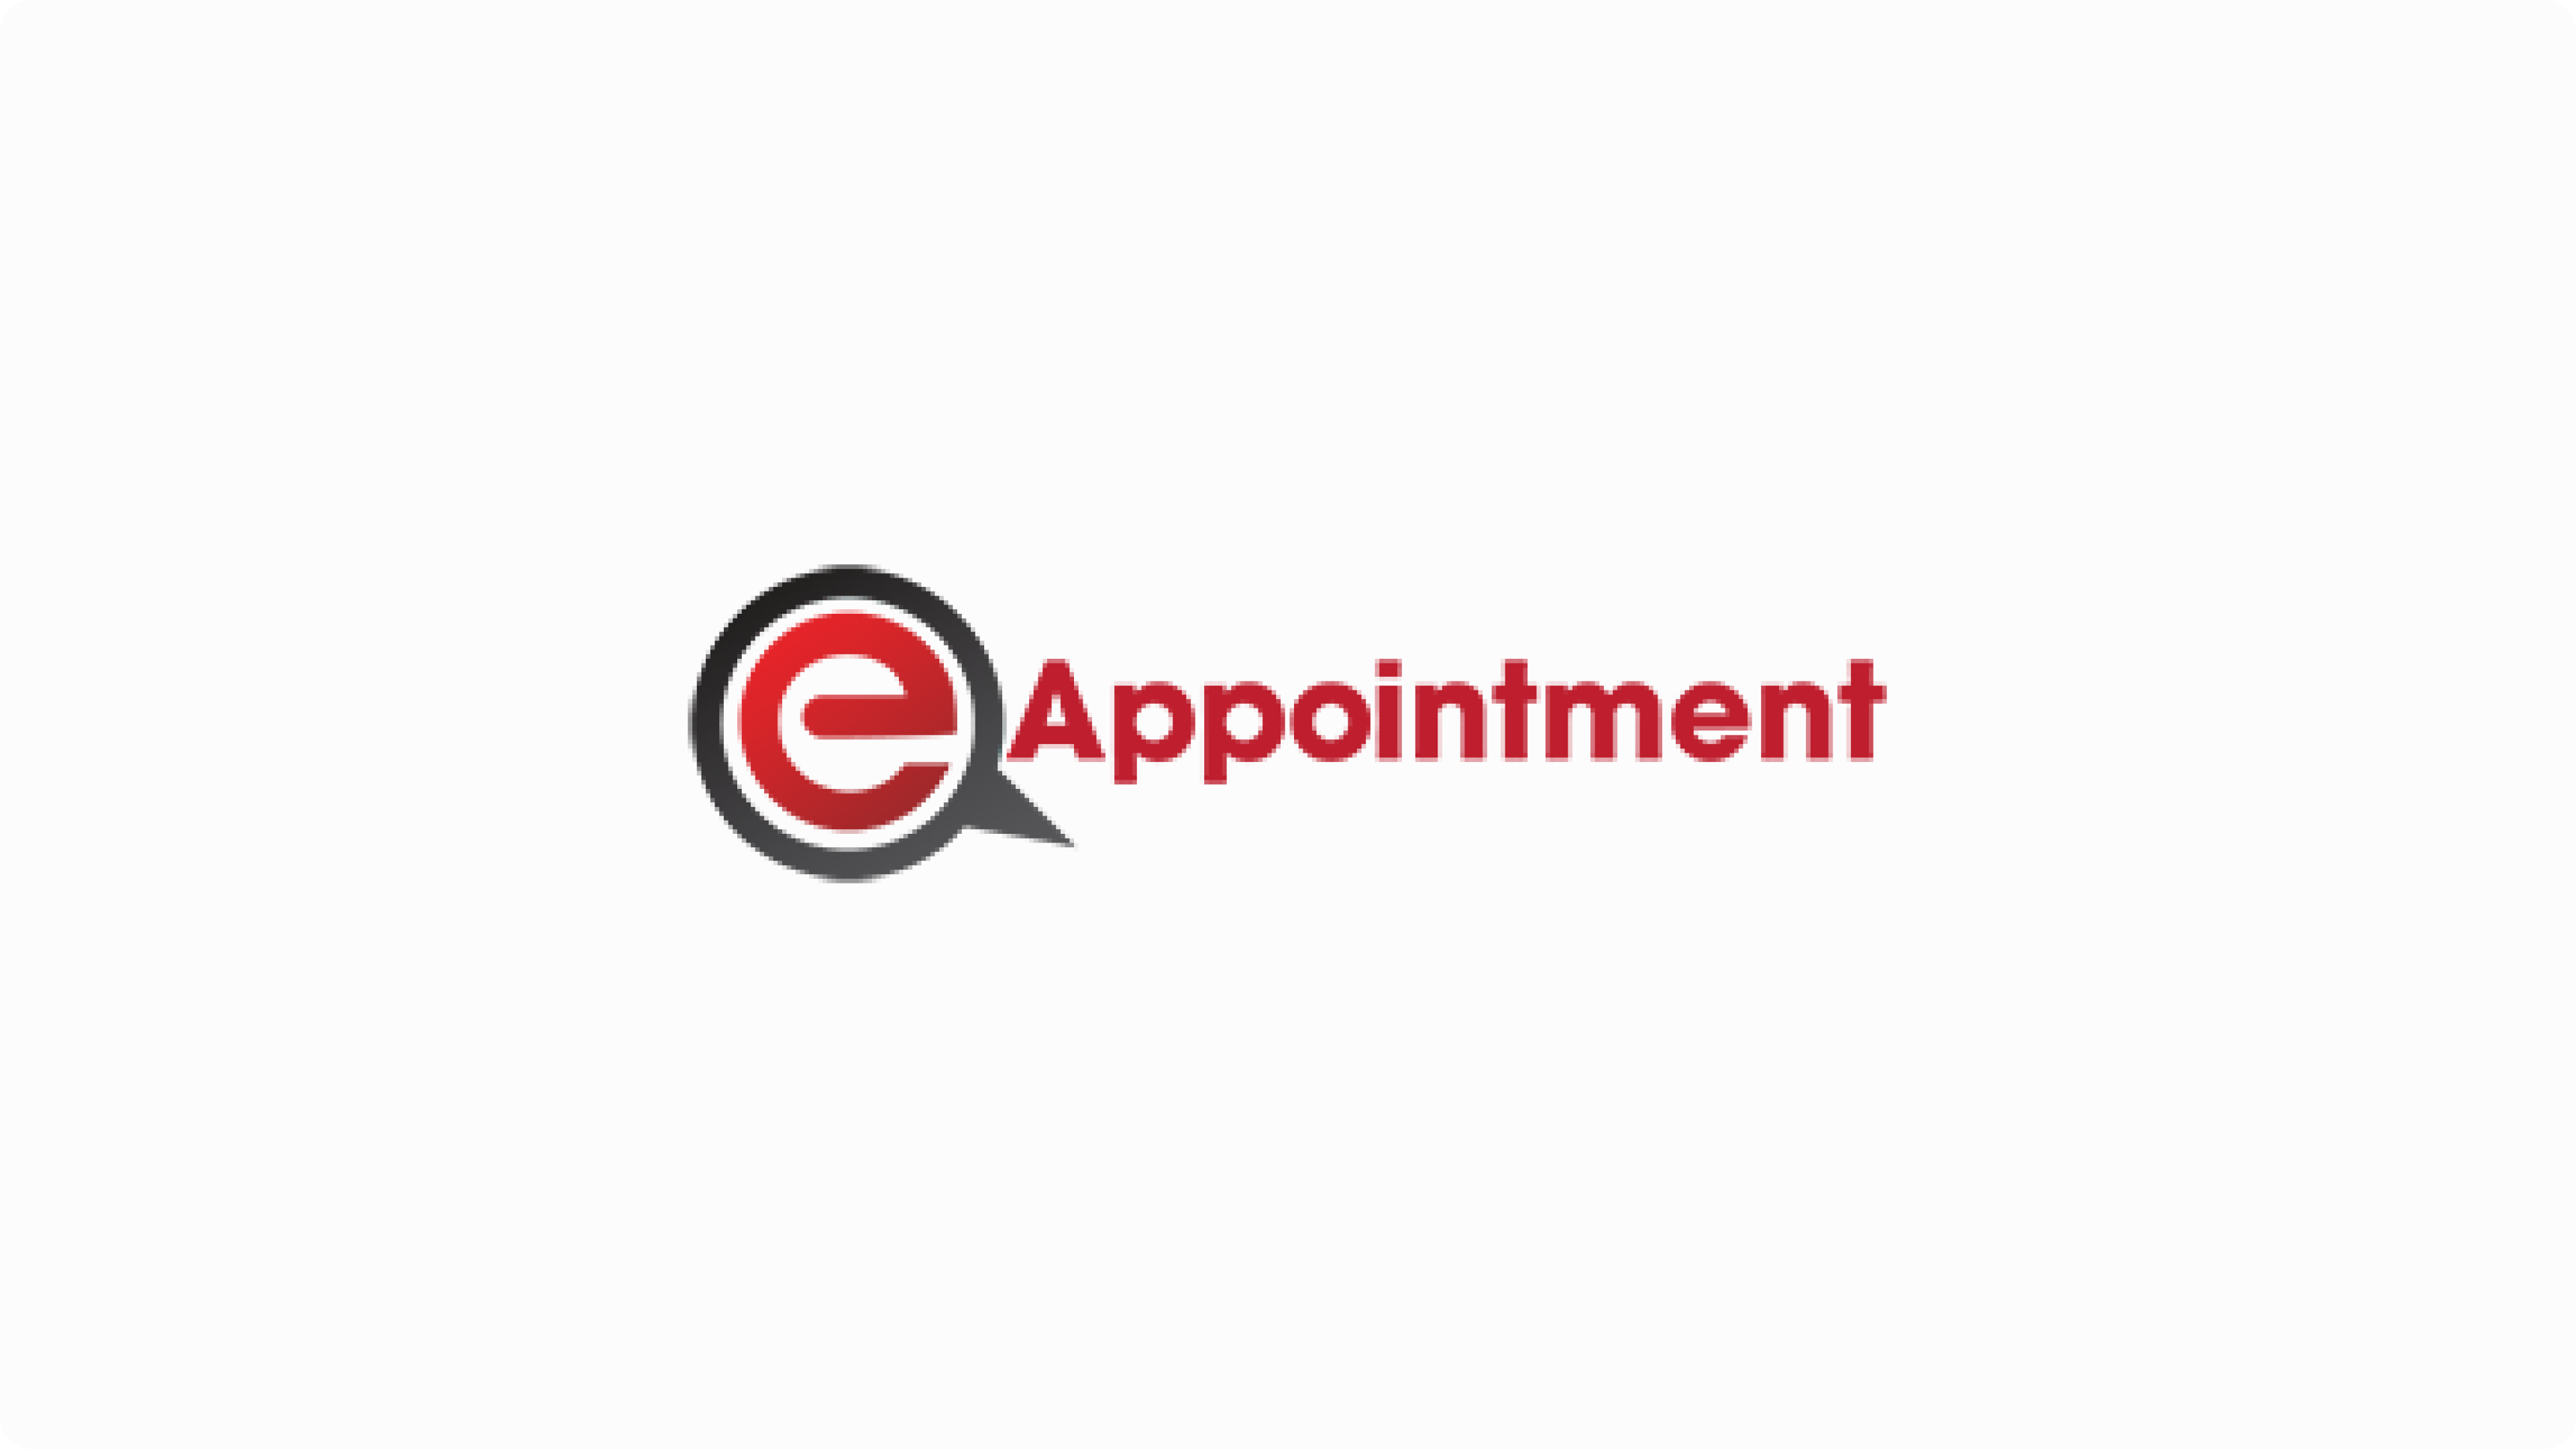 E-Appointment graphic